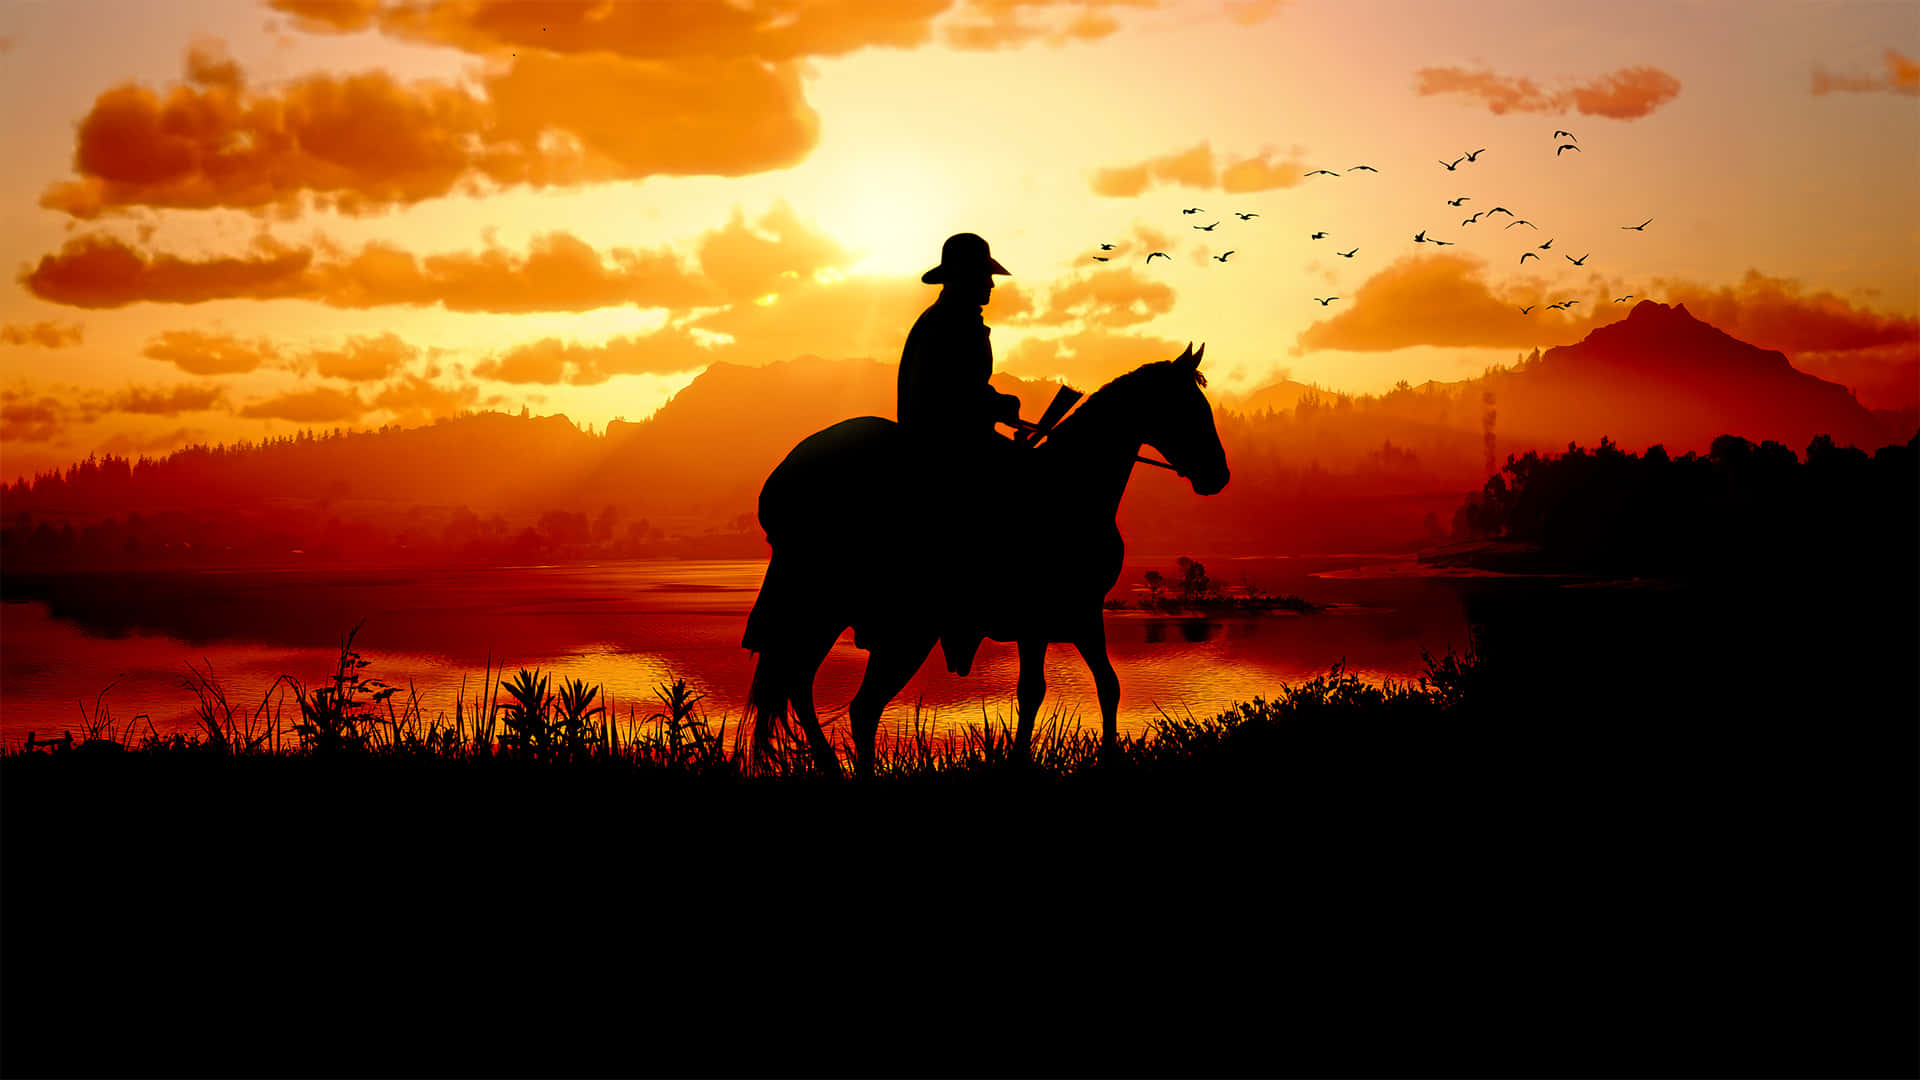 Migliorsfondo Red Dead Redemption 2 Con Un Cowboy In Ombra Al Tramonto.